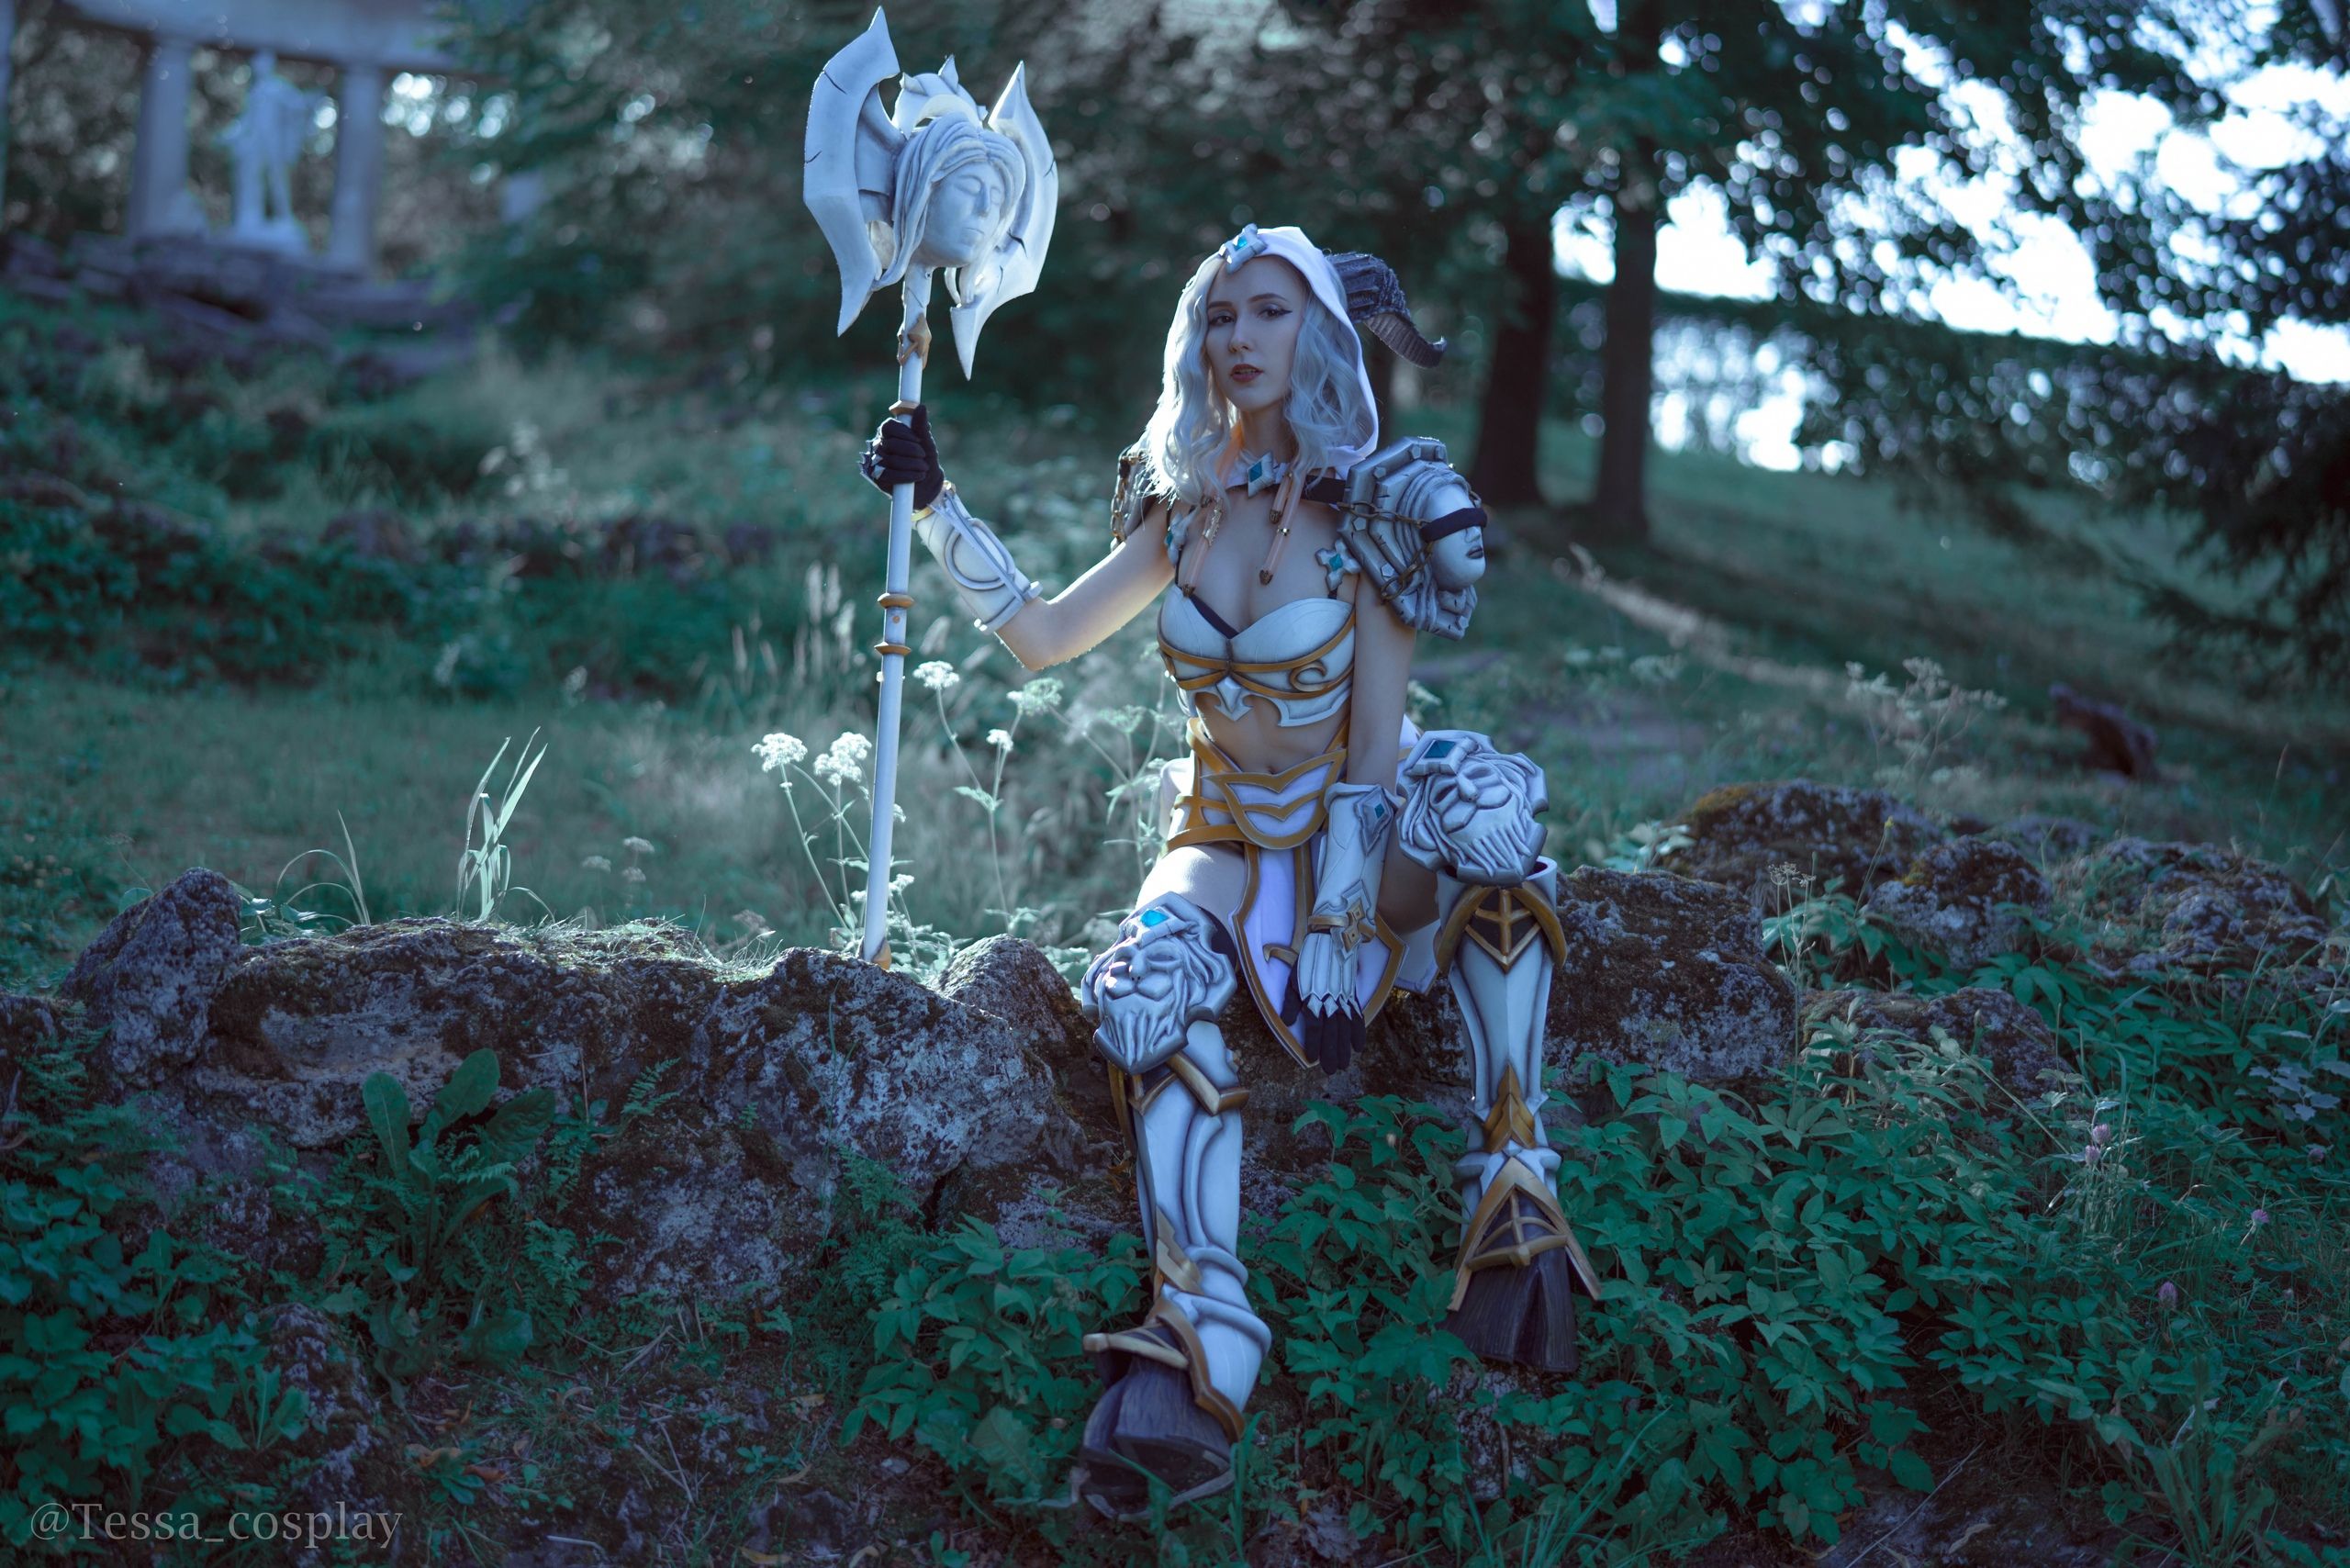 Косплей на дренейку из World of Warcraft. Косплеер: Tessa cosplay. Источник: vk.com/tessa_cosplay